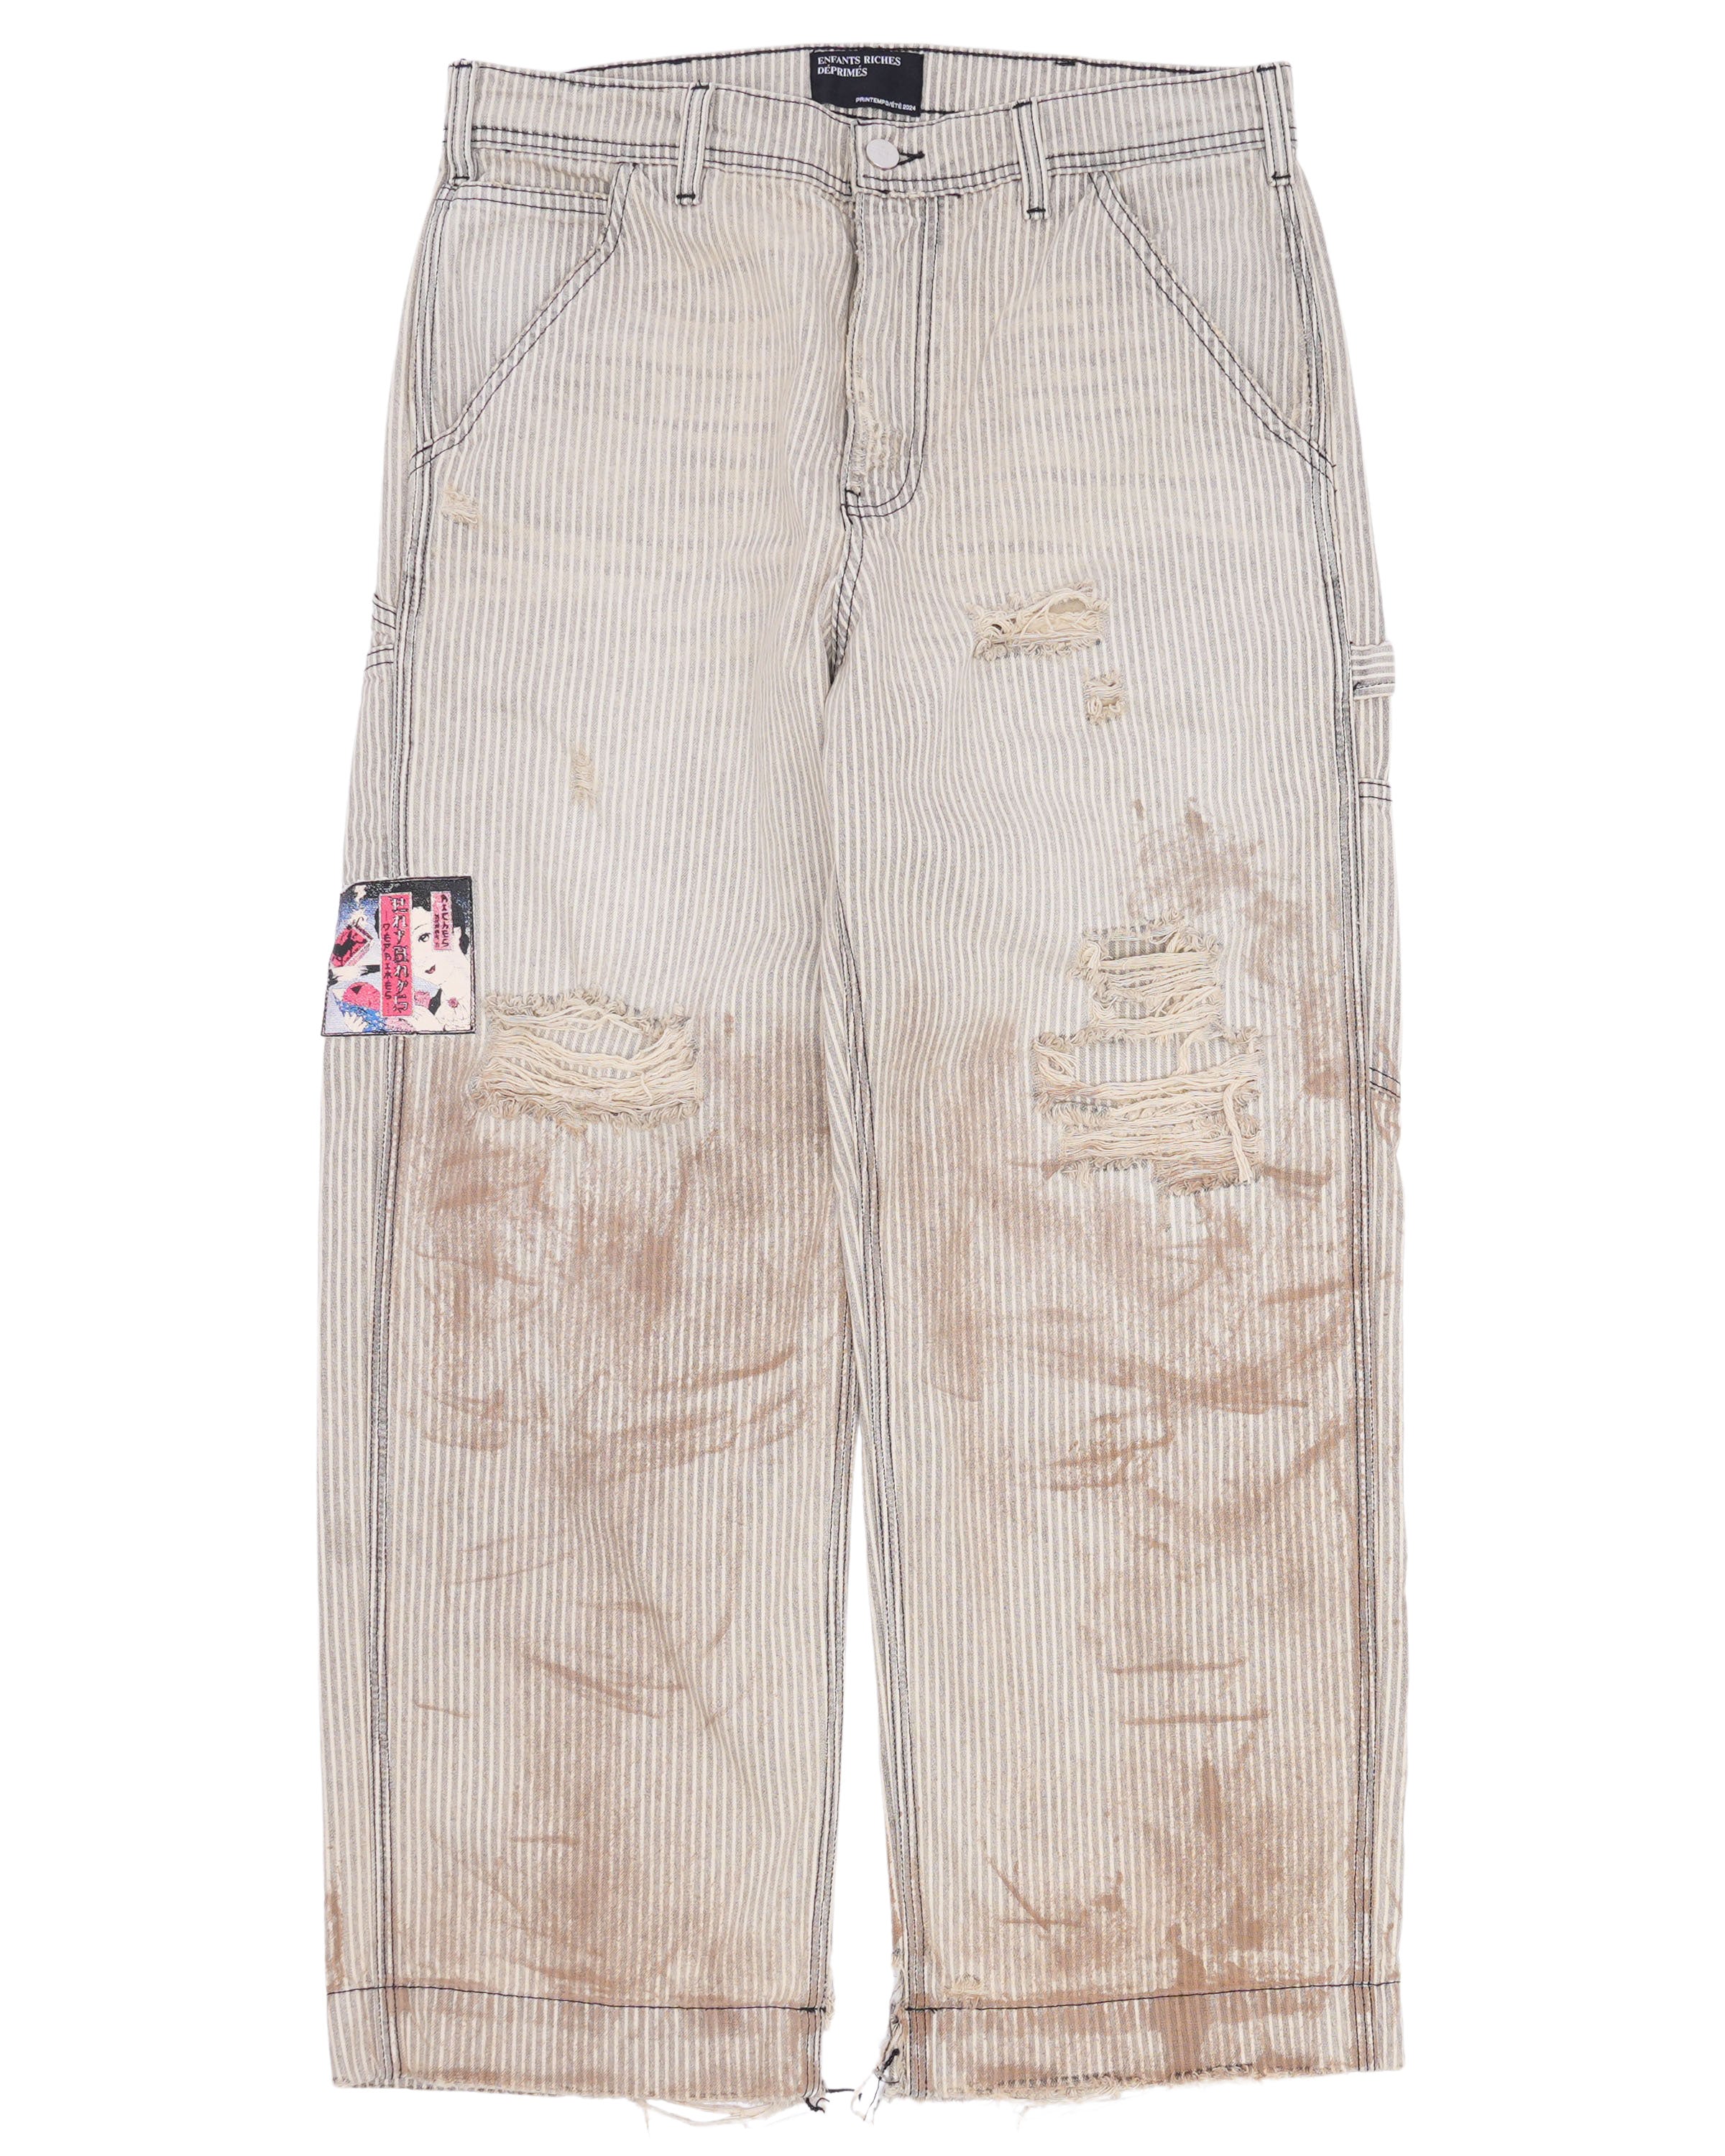 Paint Pants (Shuji Version)